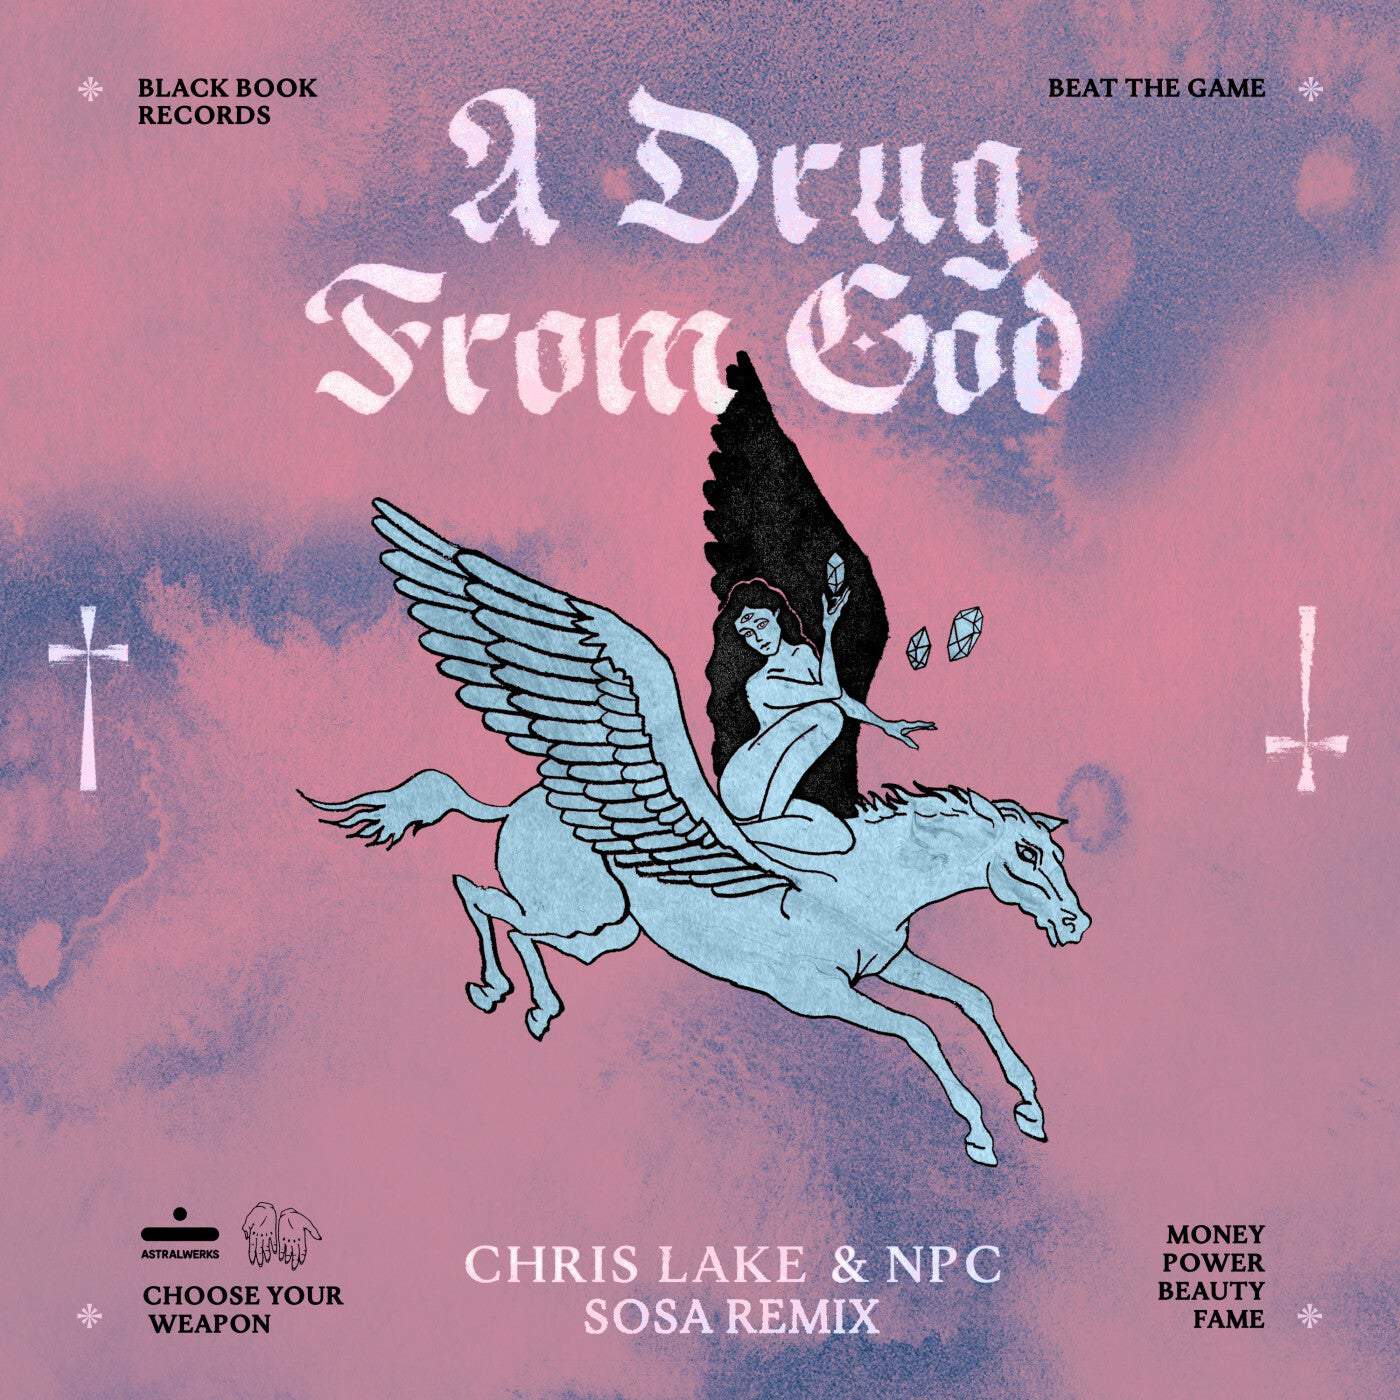 image cover: Chris Lake, NPC - A Drug From God - Sosa Remix / BB28BR1